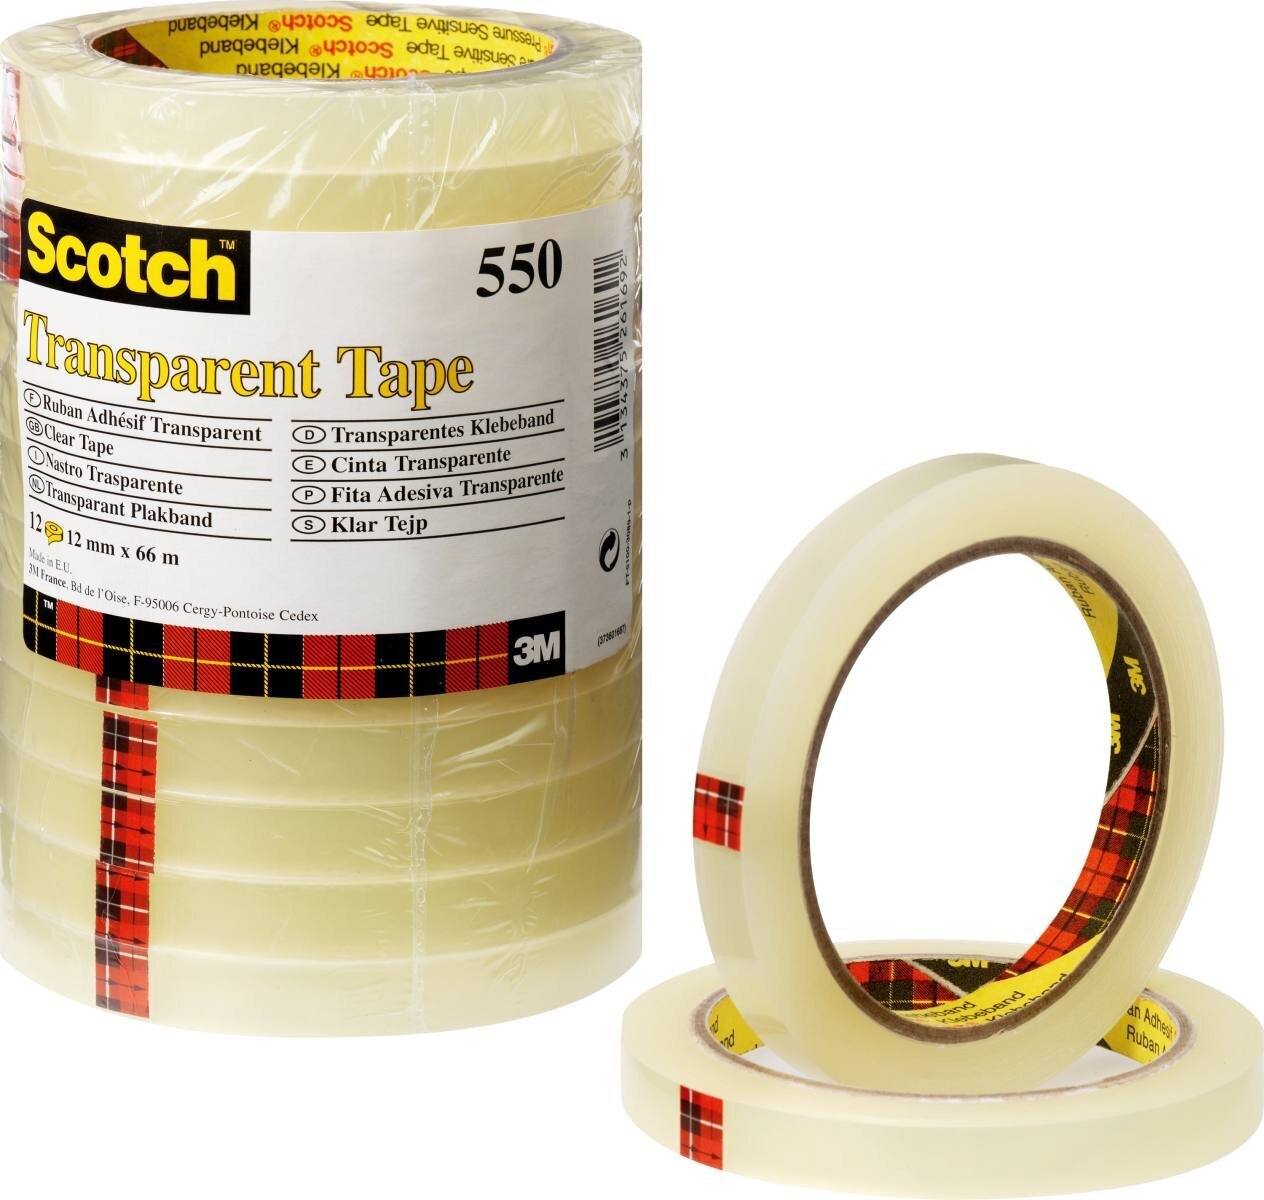 3M Scotch transparent adhesive tape 550, 19 mm x 66 m, transparent, pack of 8 rolls